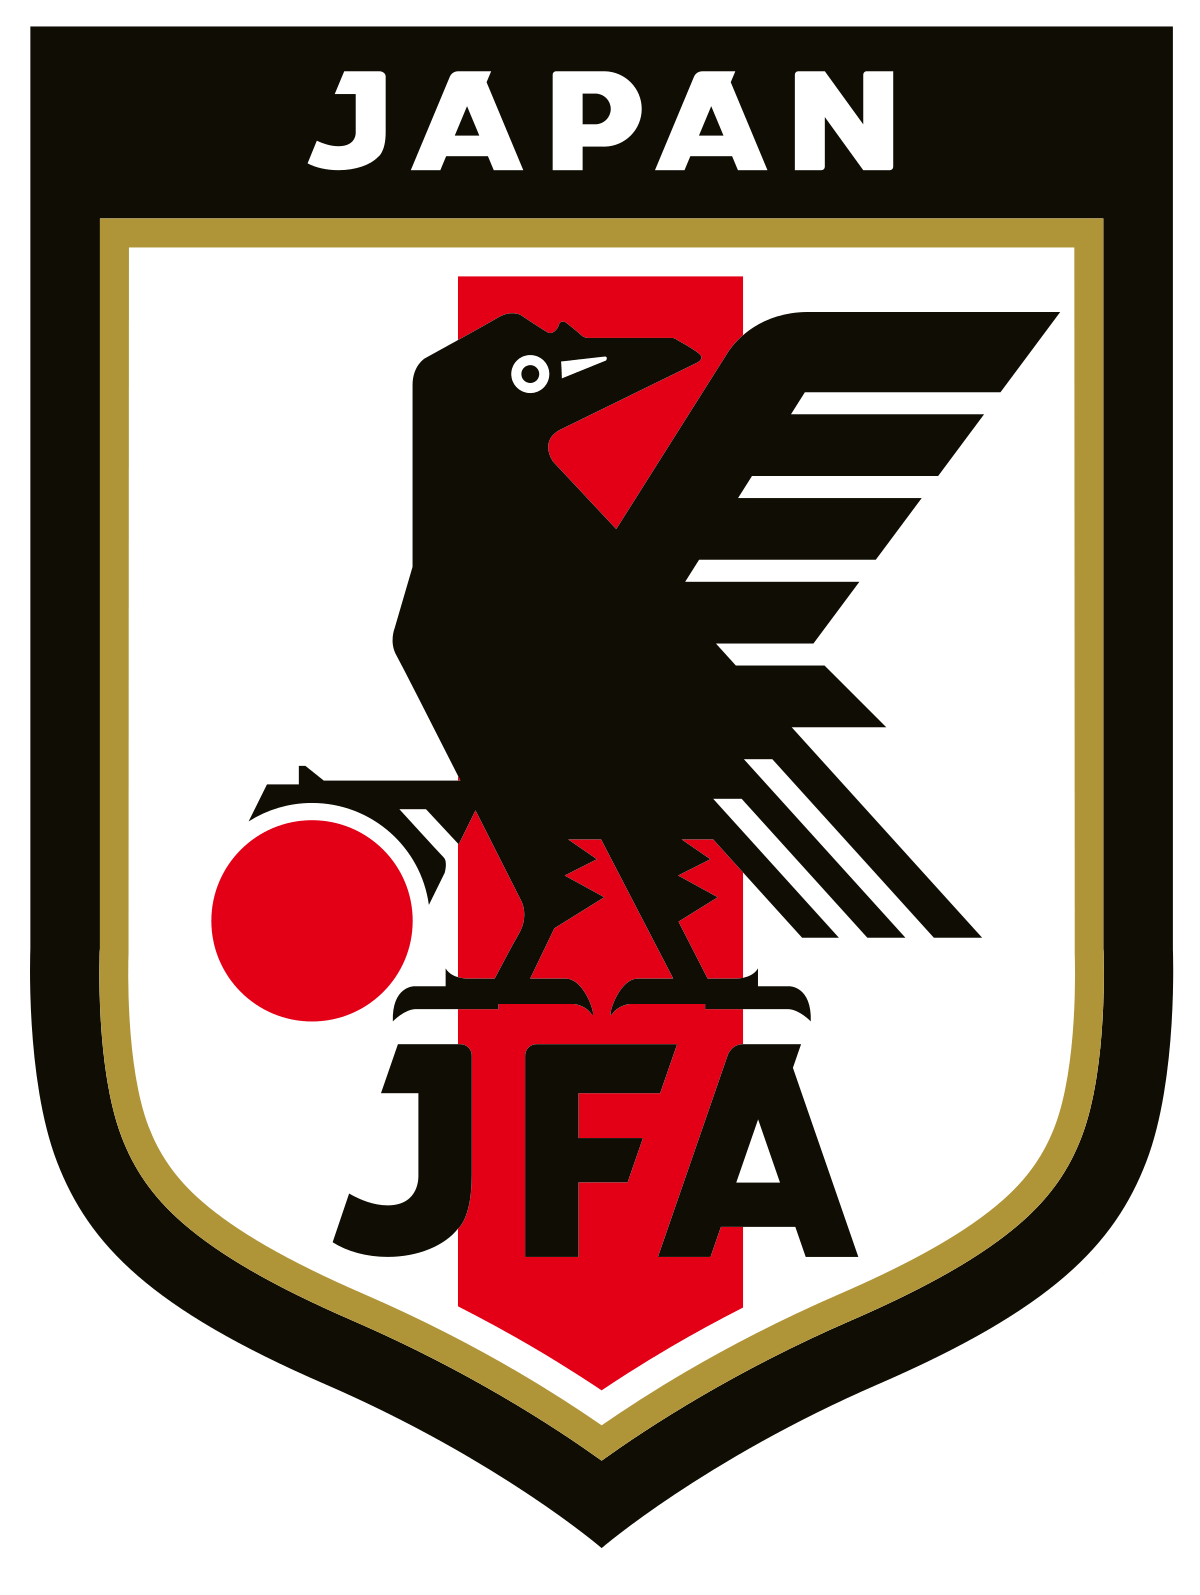 U of L Football Logo - Japan national football team